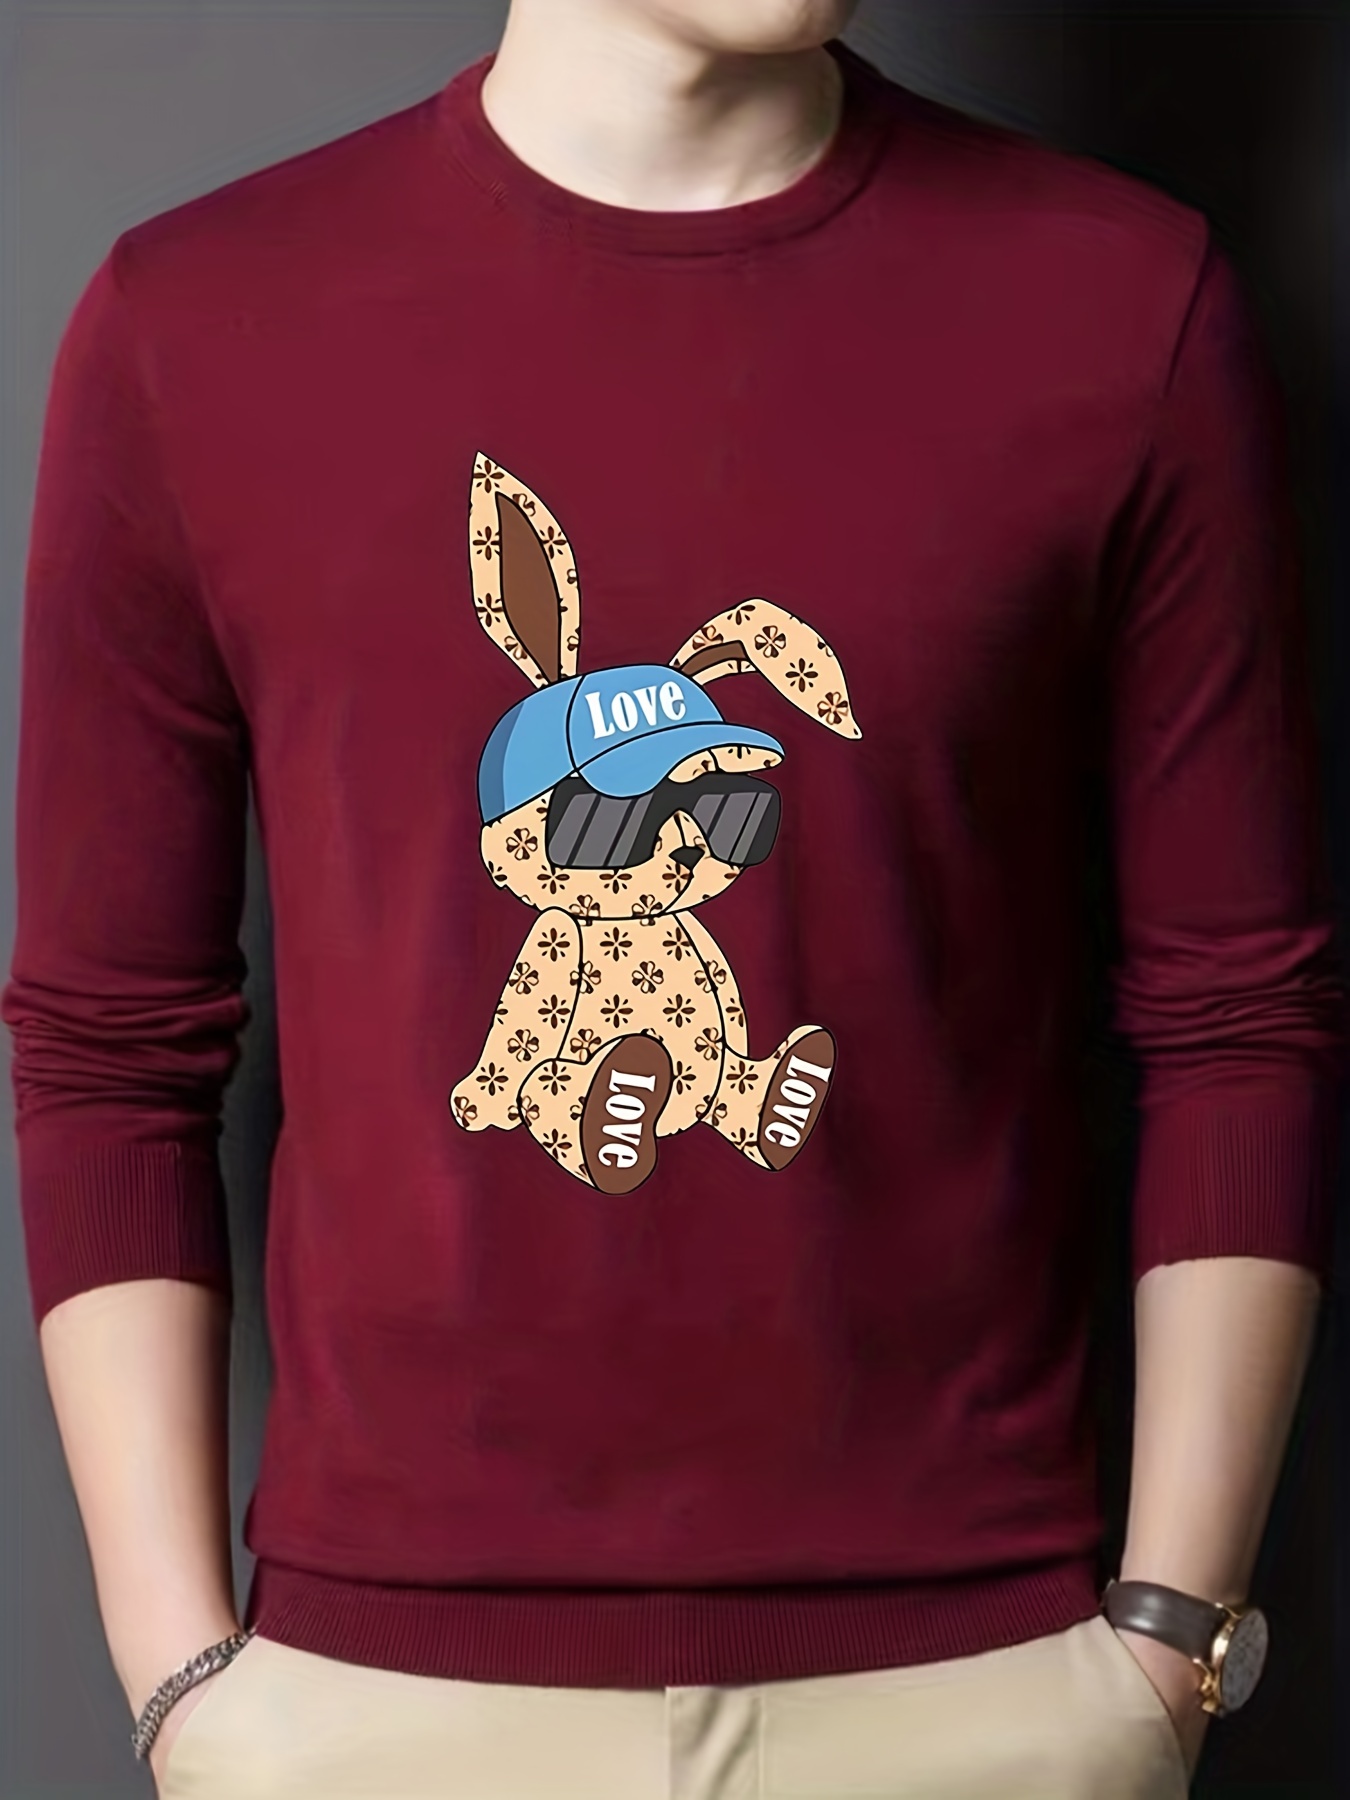 Rabbit Bugs Bunny Louis Vuitton T-shirt For Men And Women